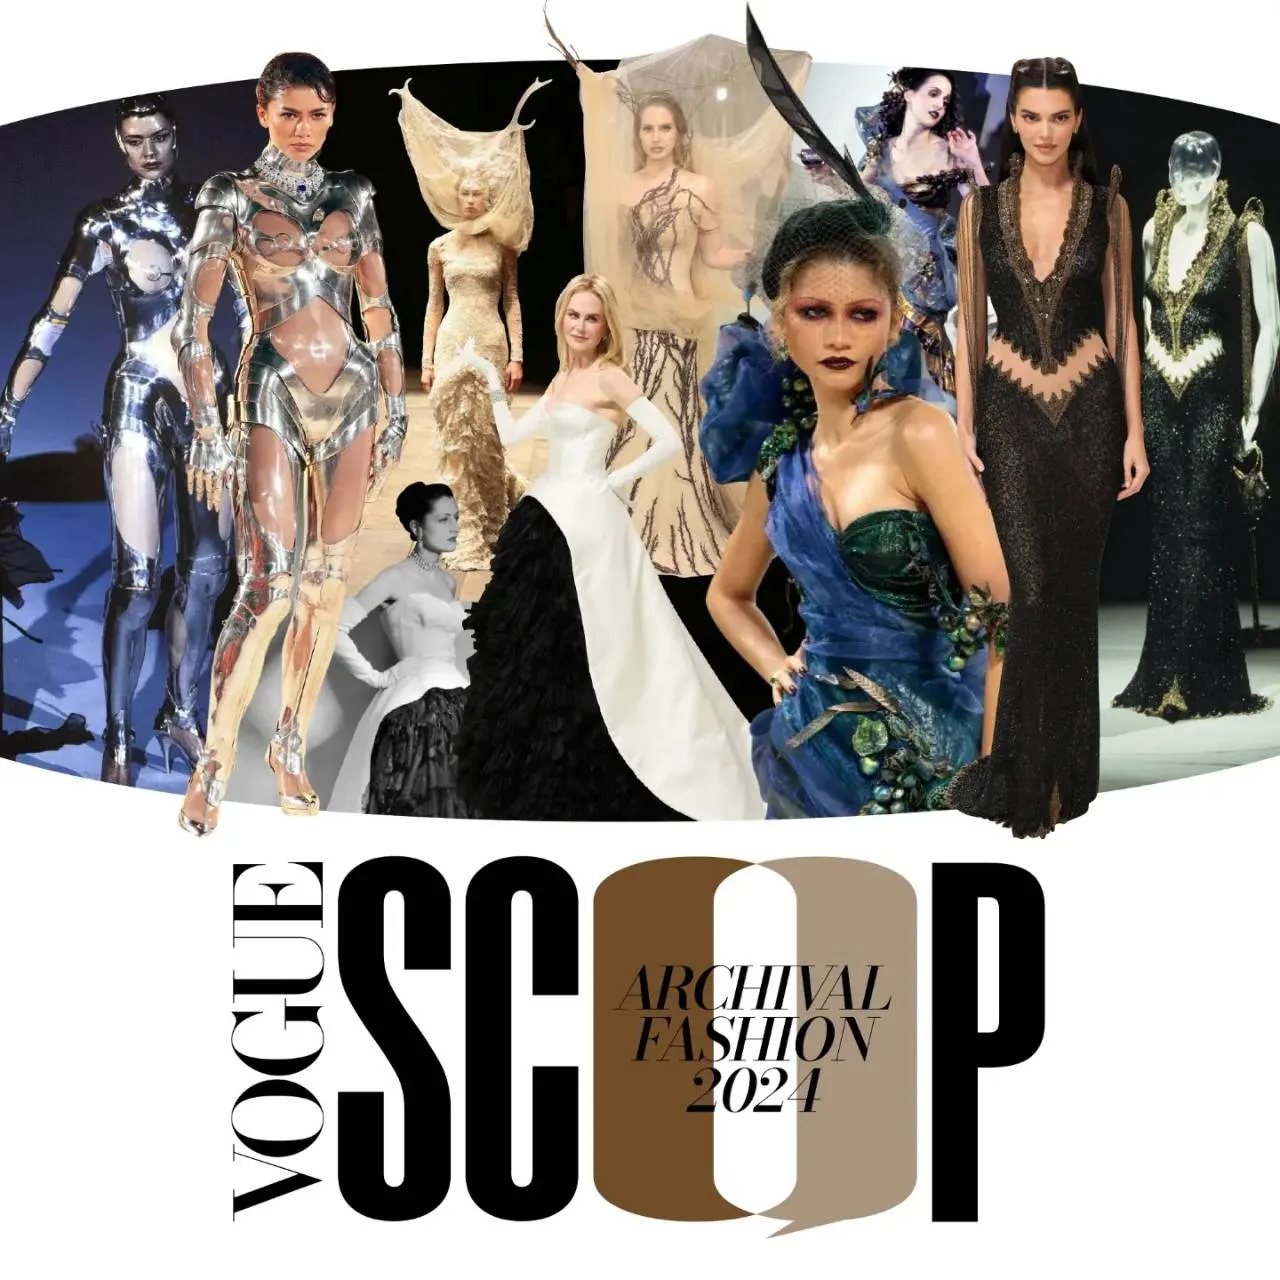 Vogue Scoop Archival Fashion